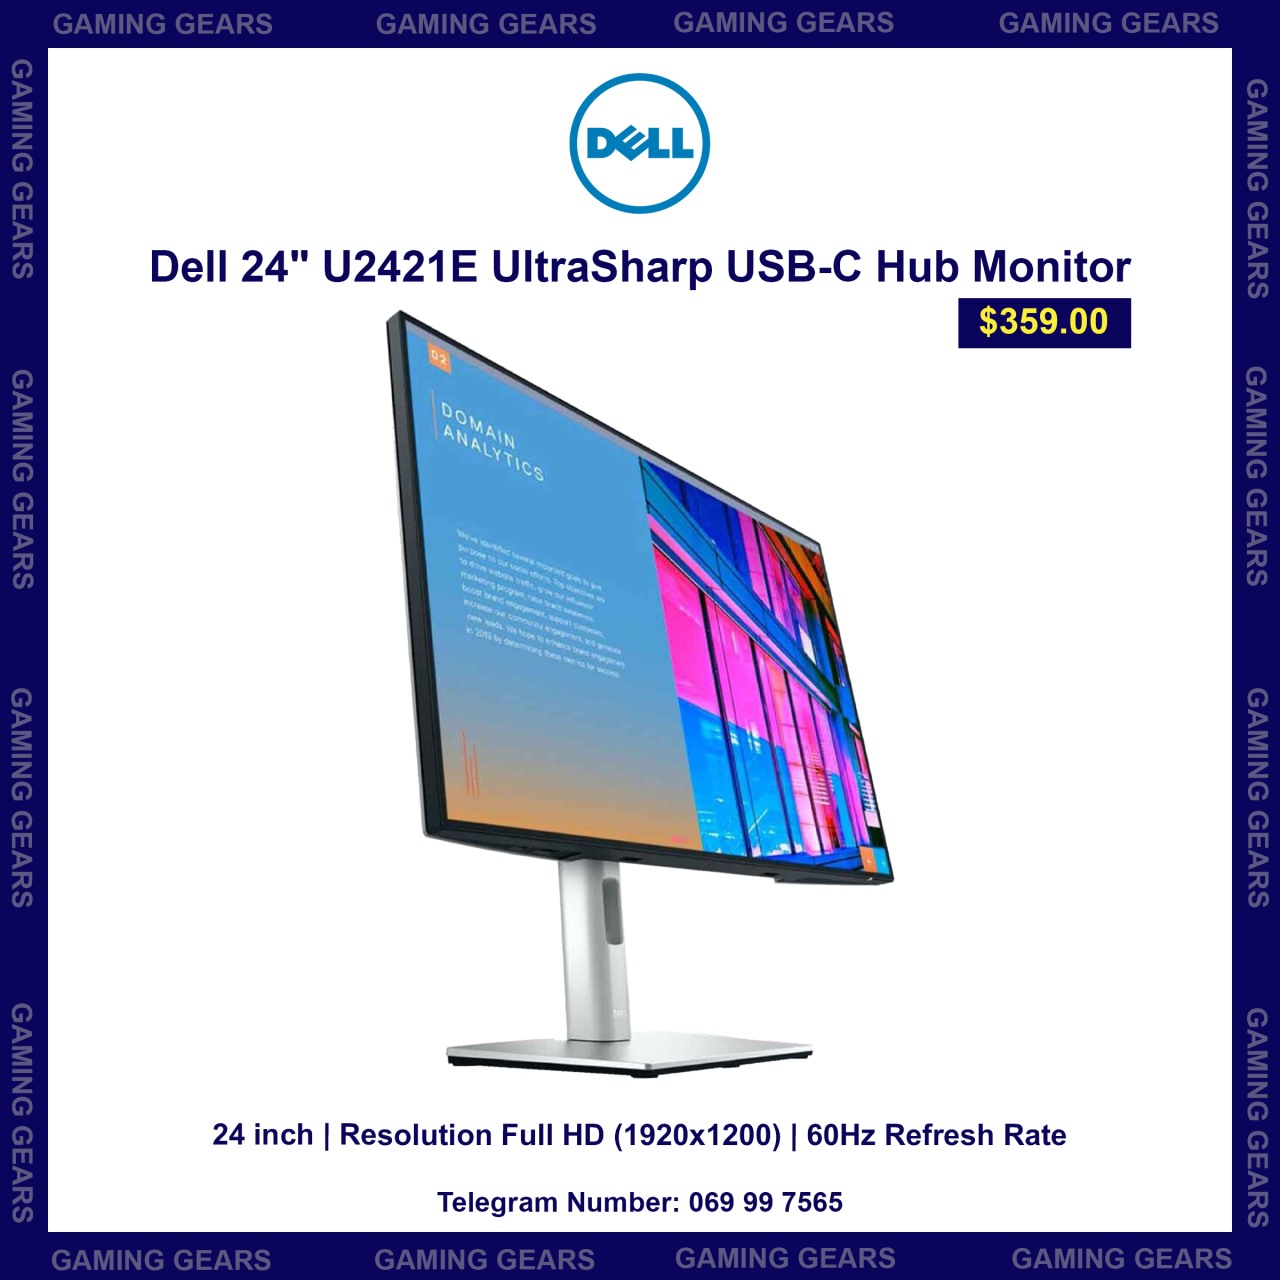 Dell 24" U2421E UltraSharp USB-C Hub Monitor